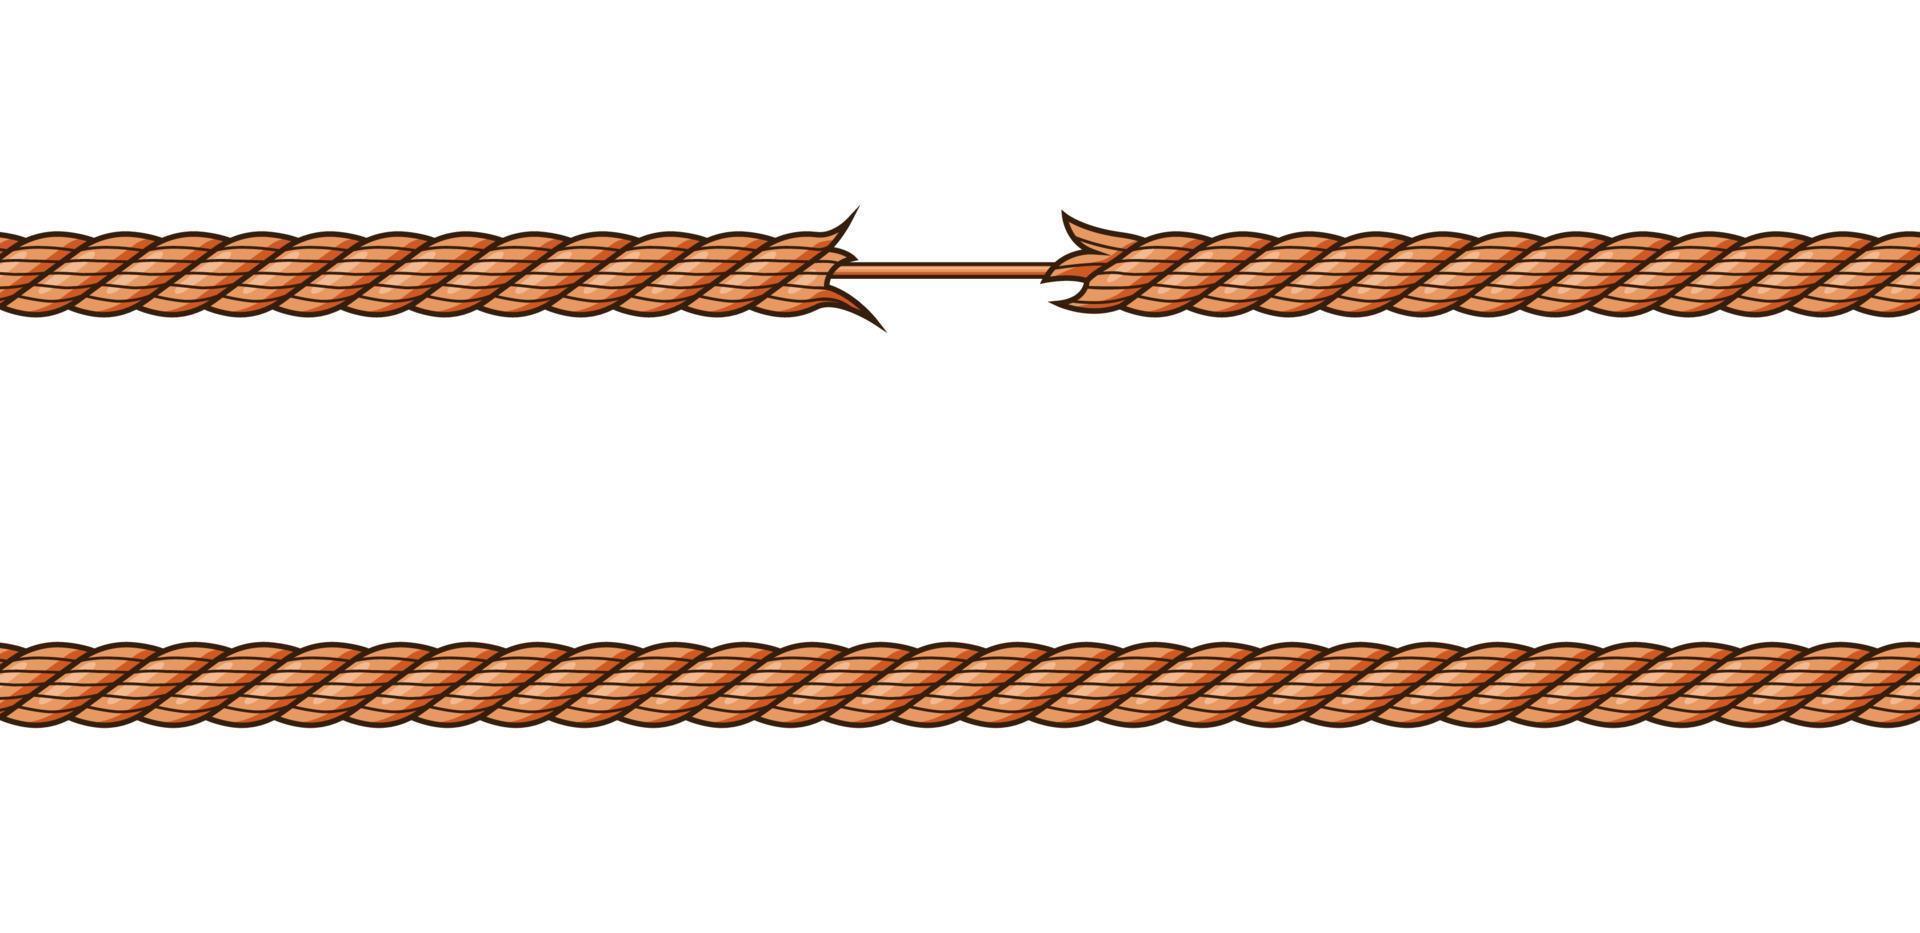 vetor de corda quebrada isolado no fundo branco.